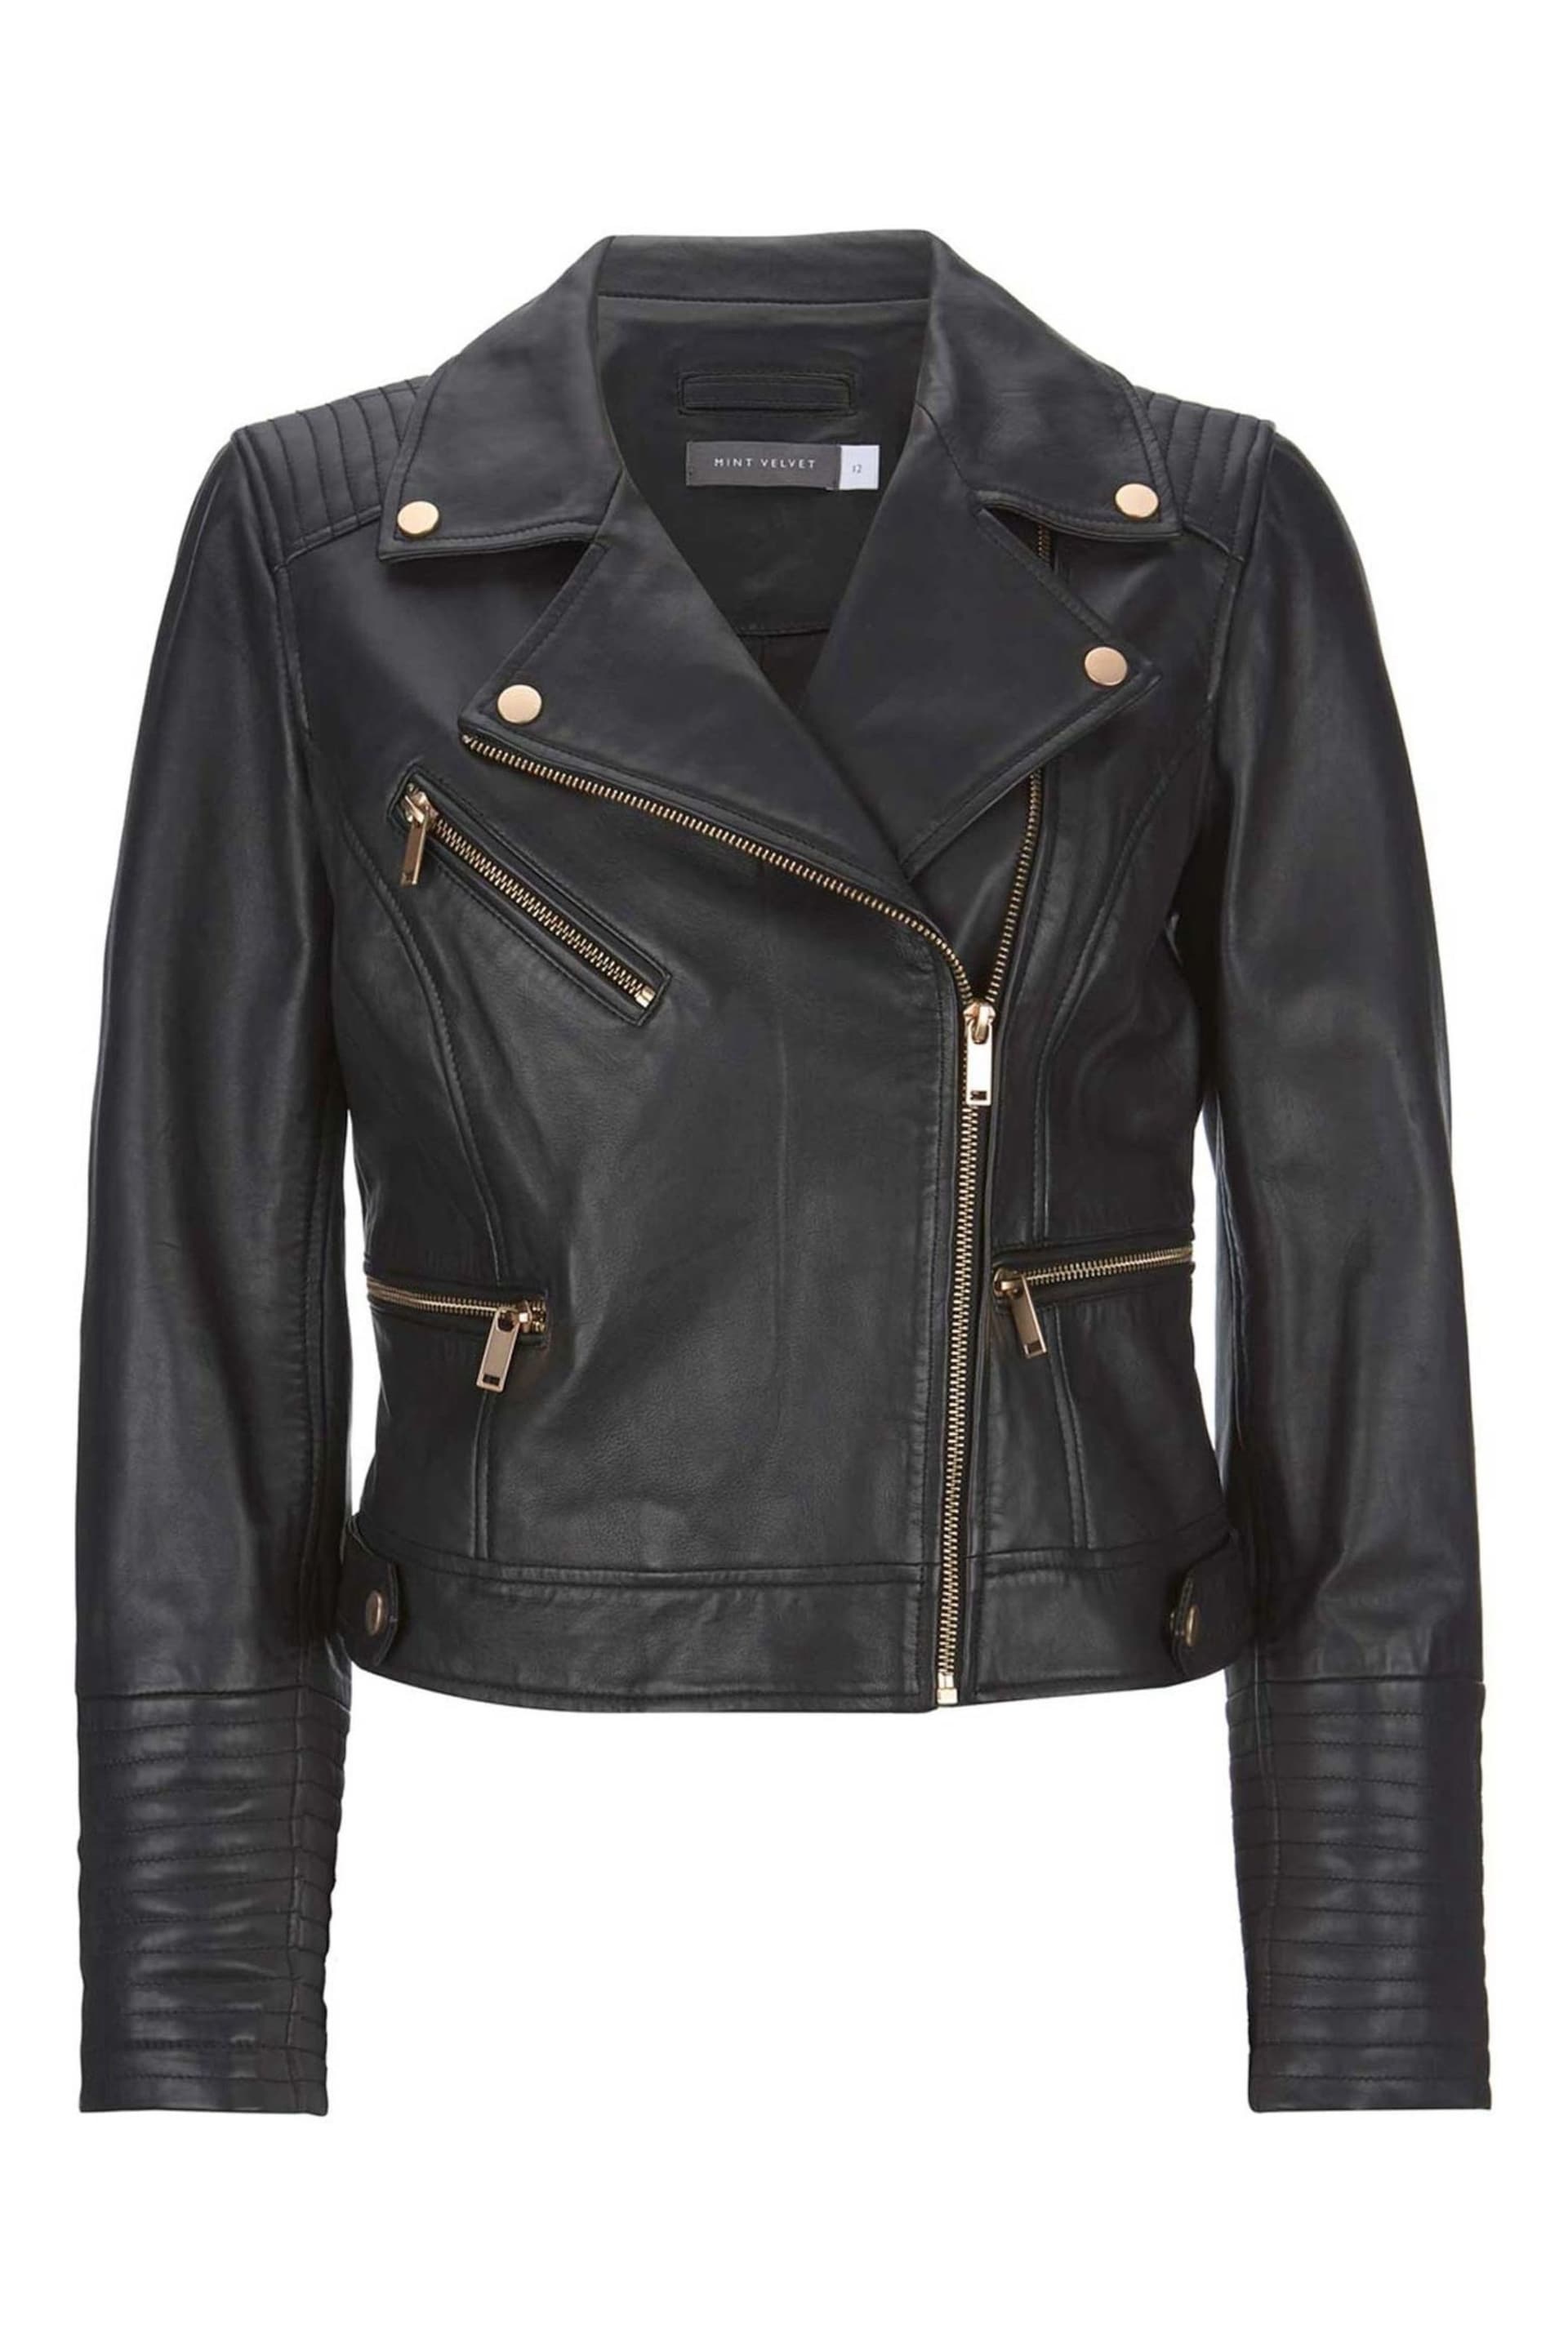 Mint Velvet Black Casual Leather Jacket - Image 2 of 3